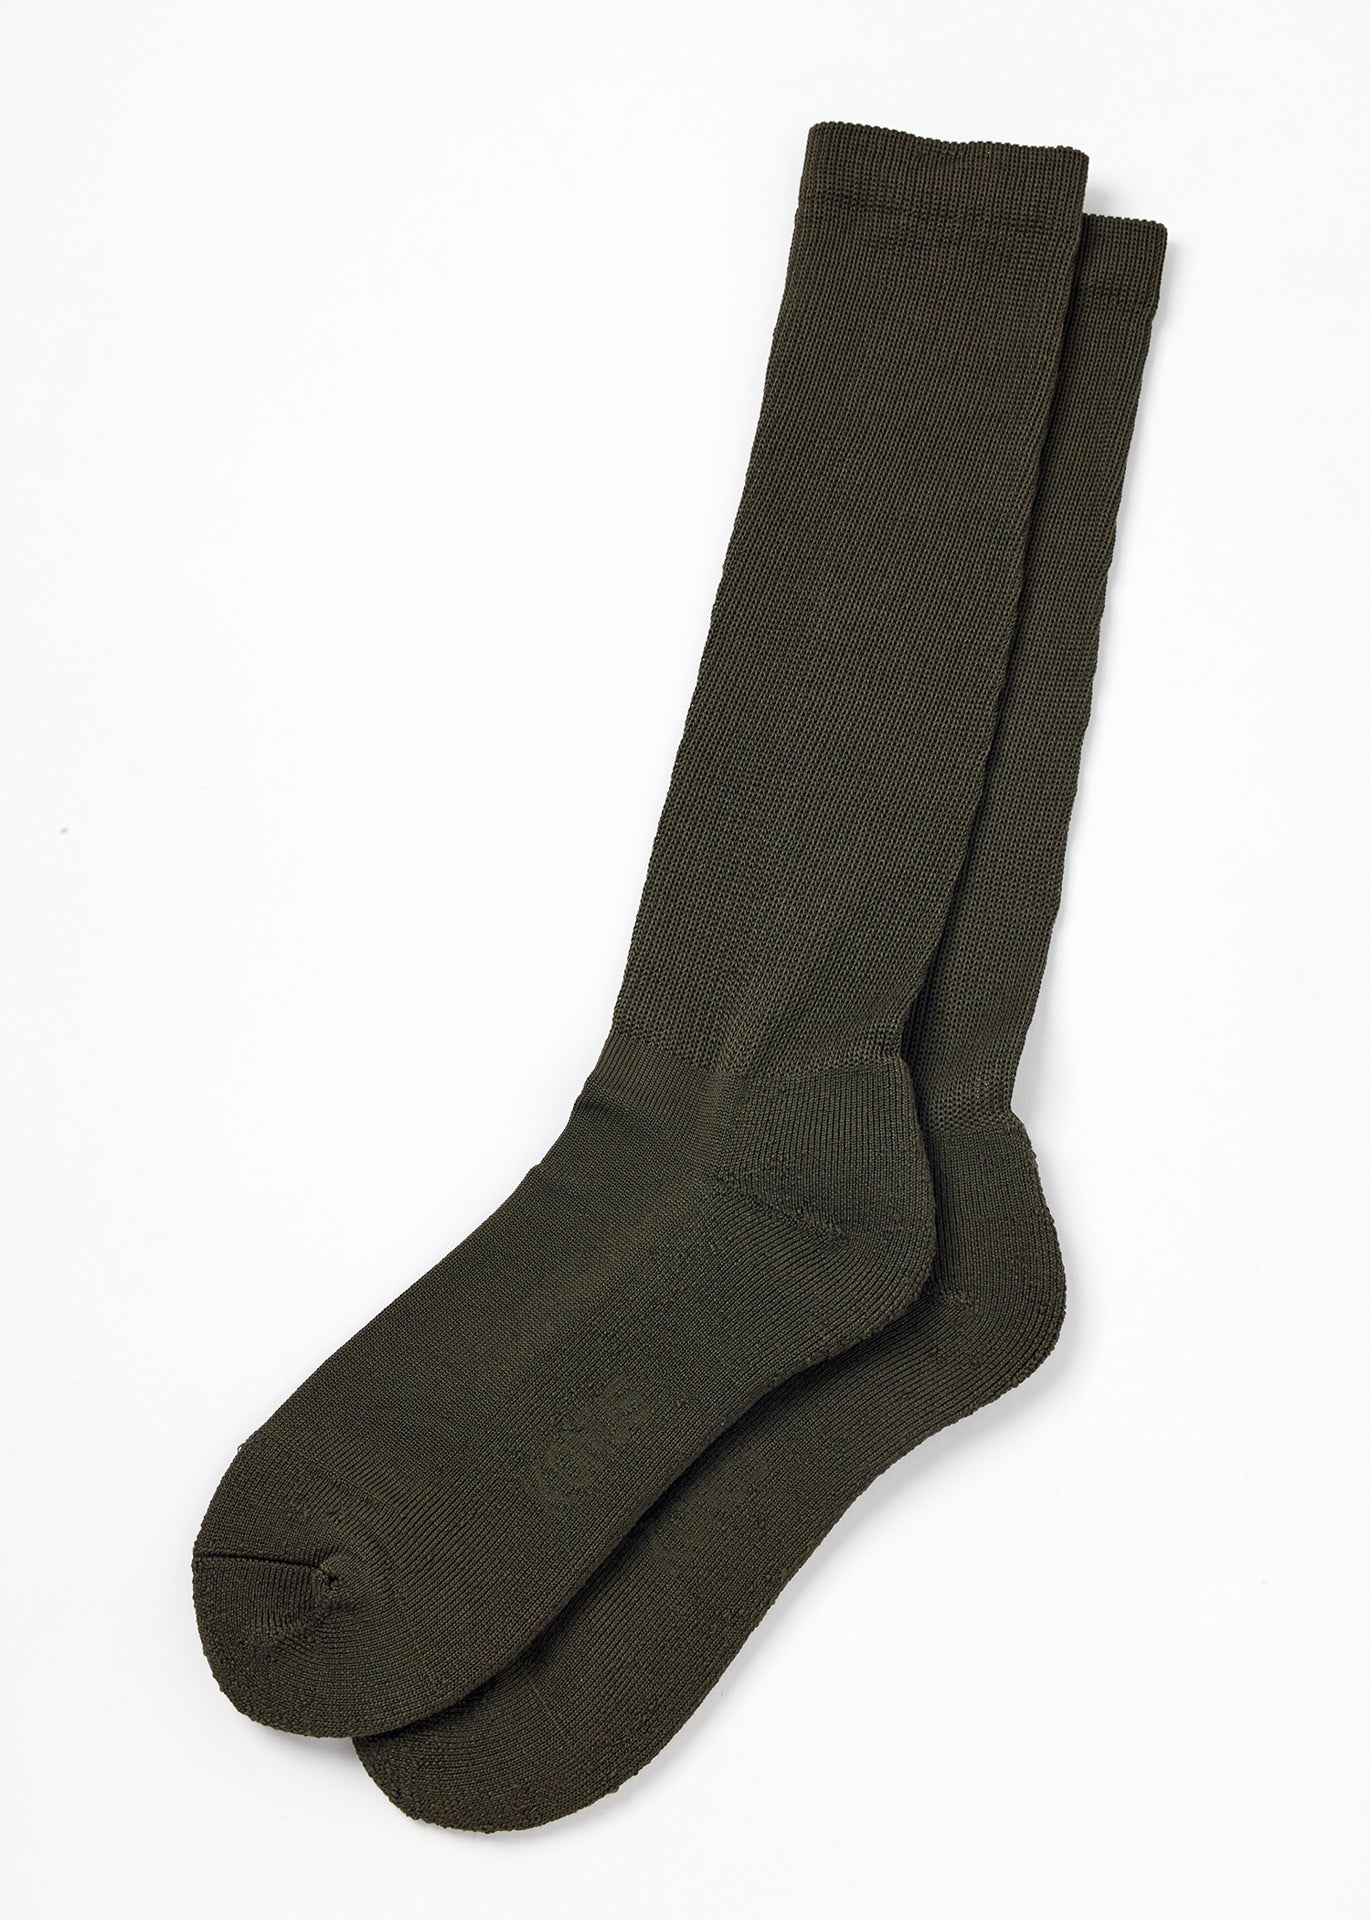 Eco Friendly Reolite Tech Sock in Army by Konus Brand by Shop at Konus